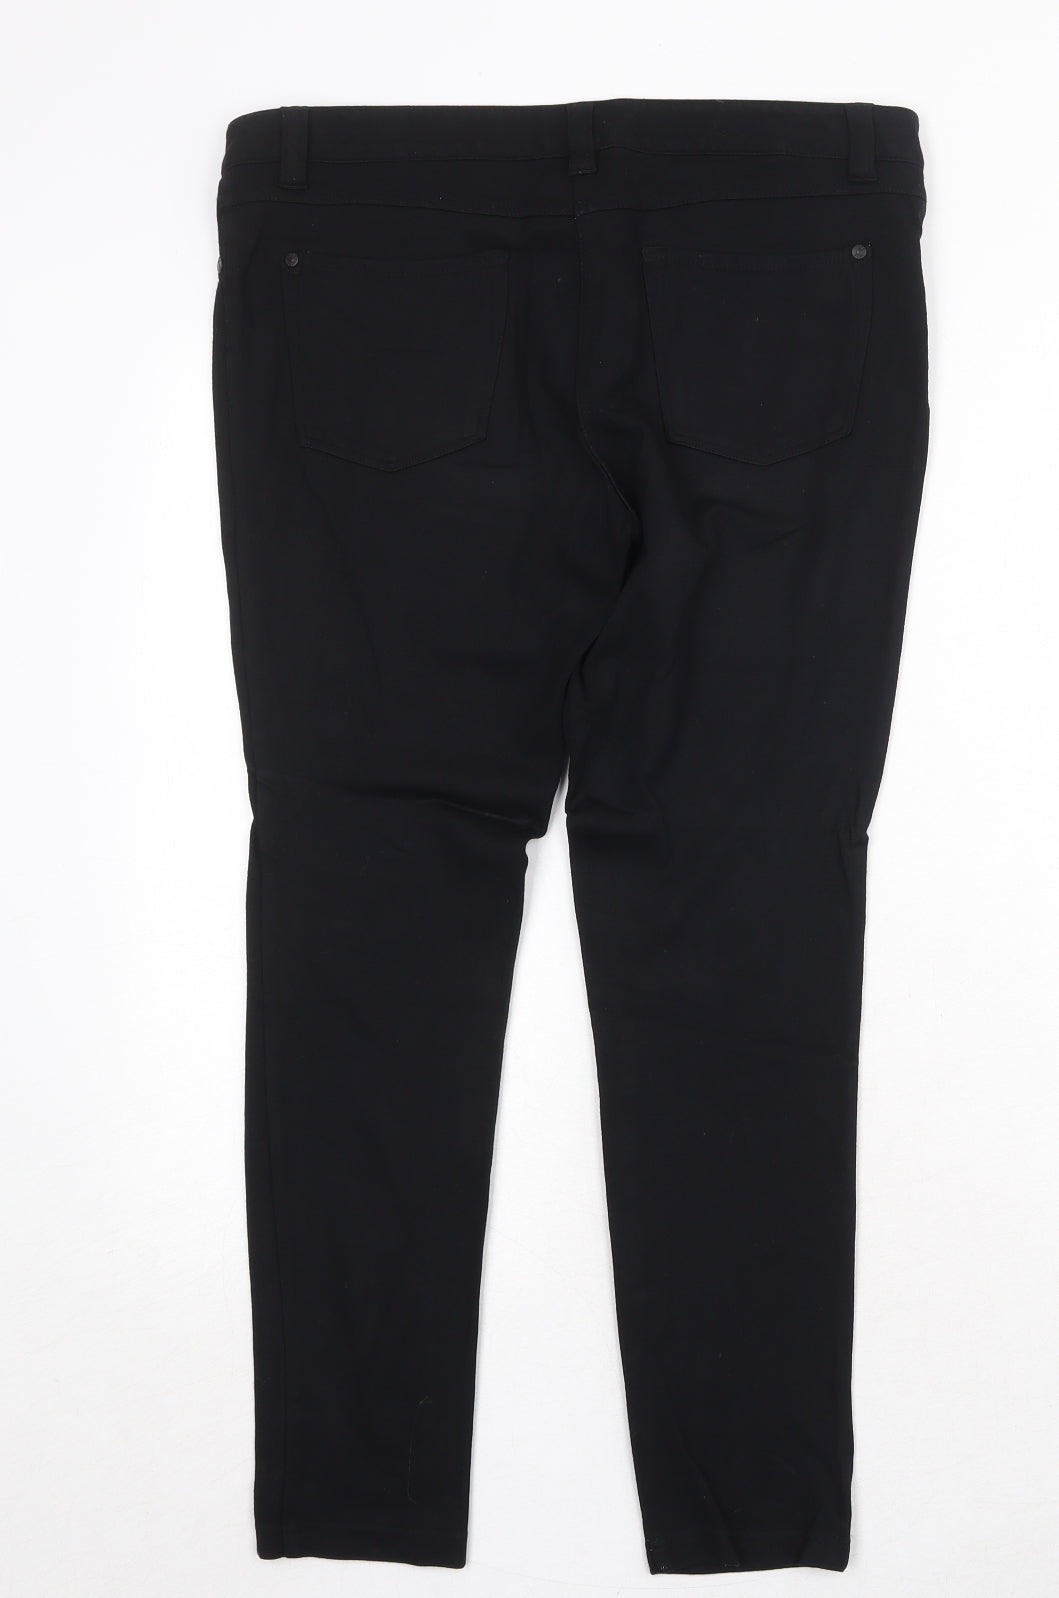 NEXT Womens Black Viscose Trousers Size 12 Regular Zip